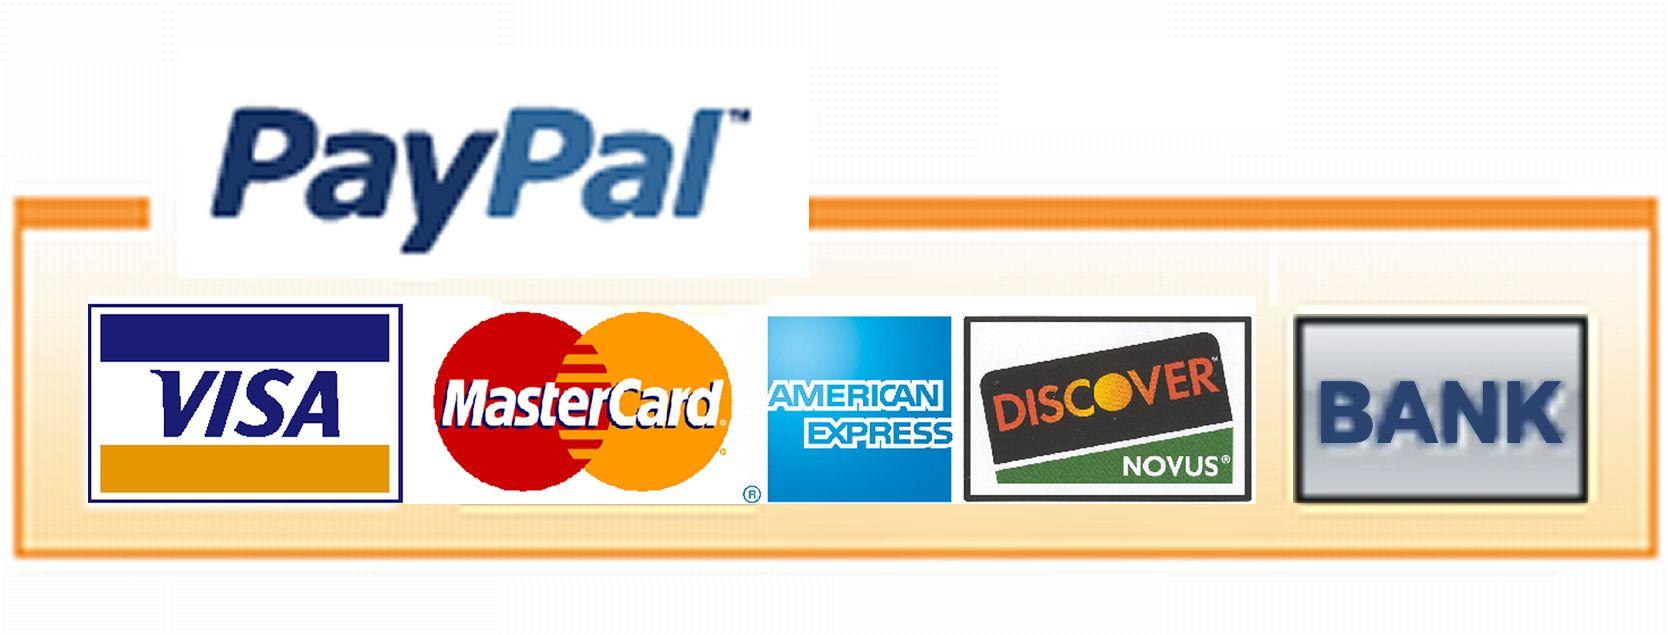 PayPal Credit Card Logo - Free Paypal Credit Card Icon 209446 | Download Paypal Credit Card ...